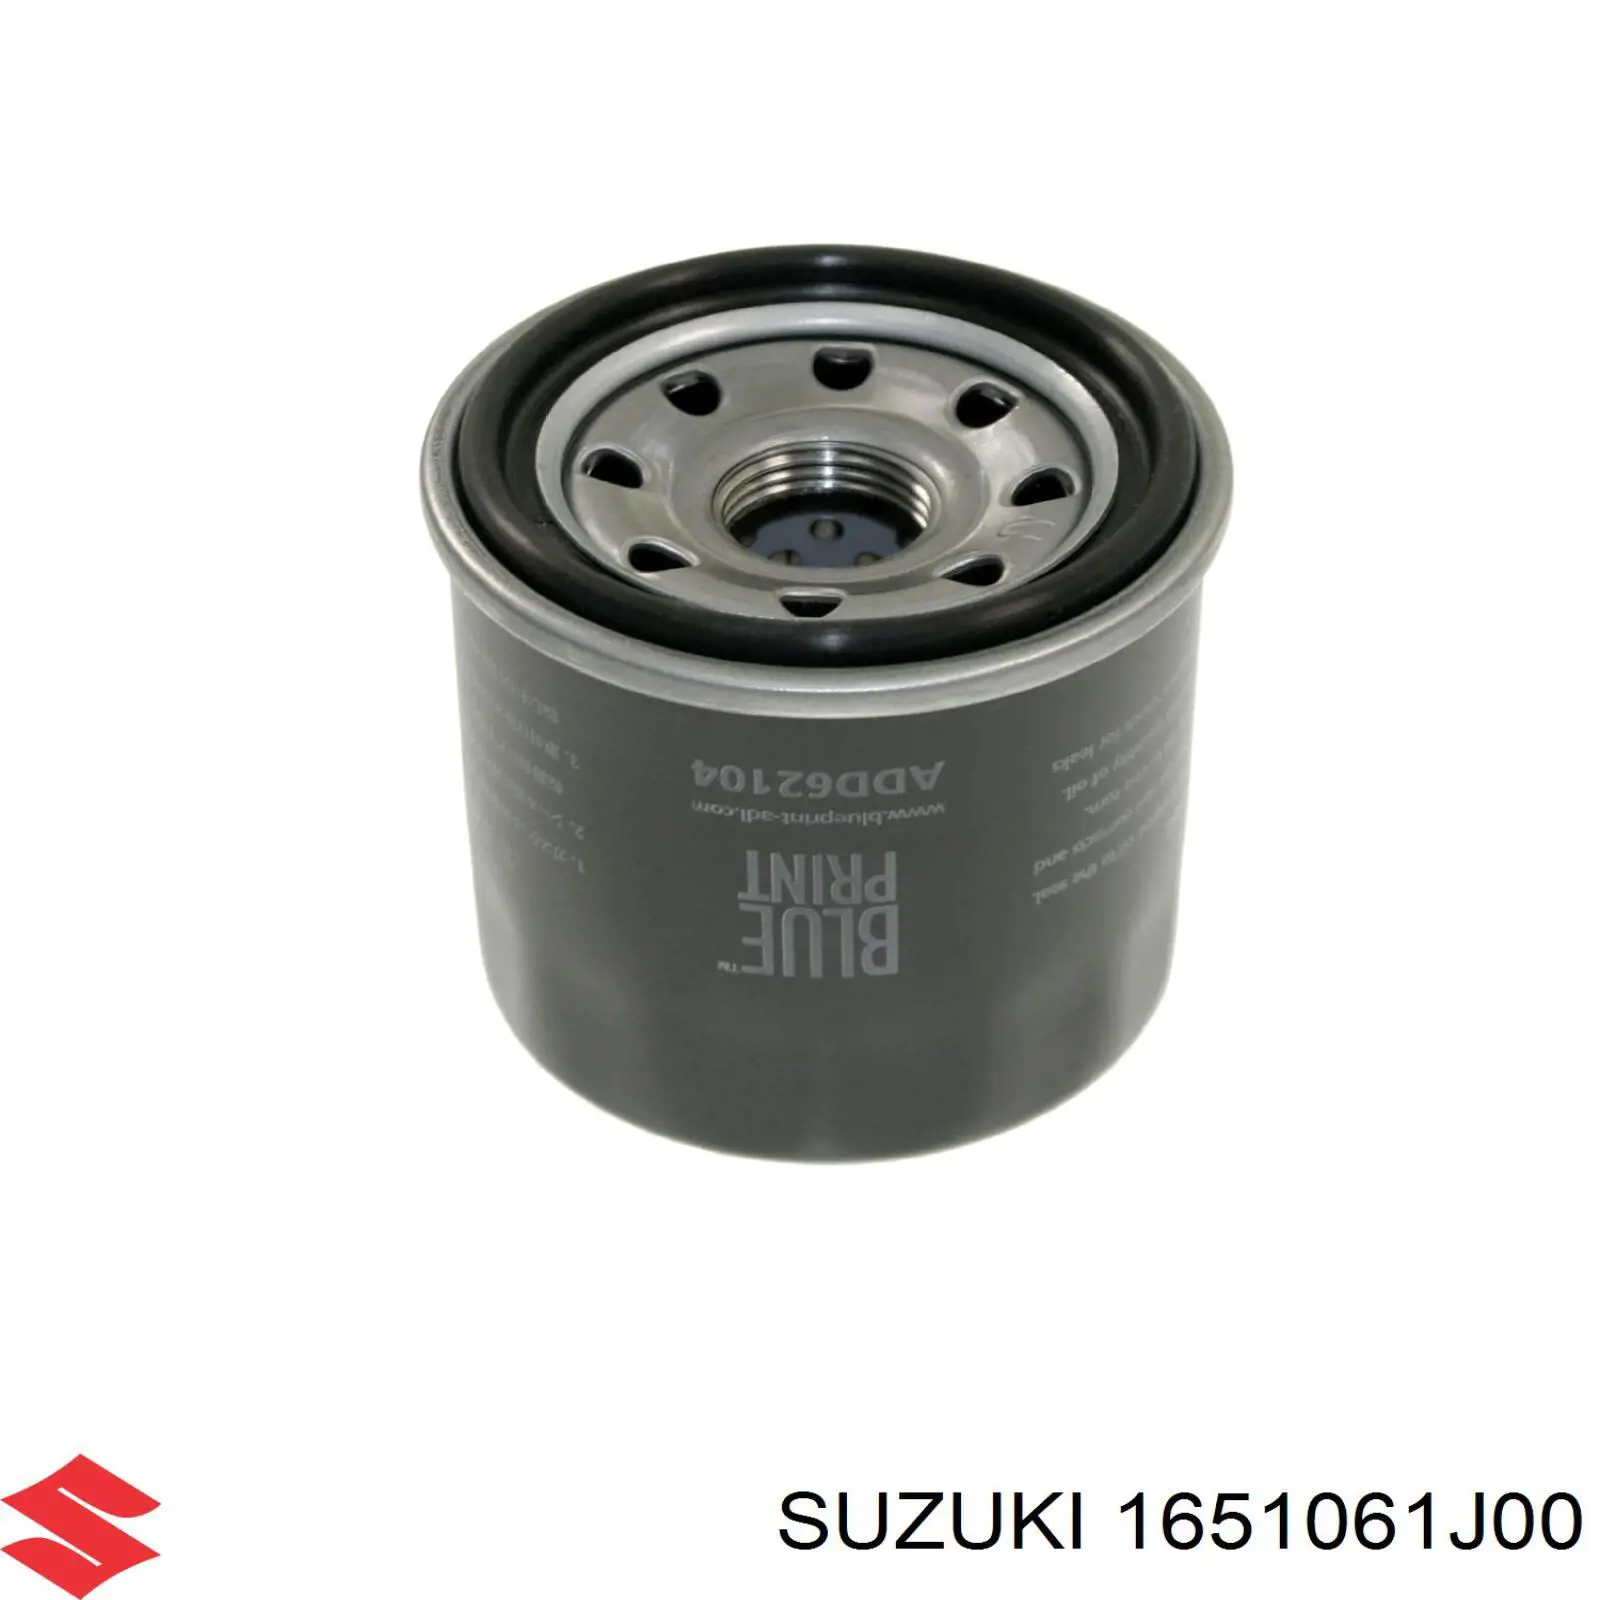 1651061J00 Suzuki filtro de óleo